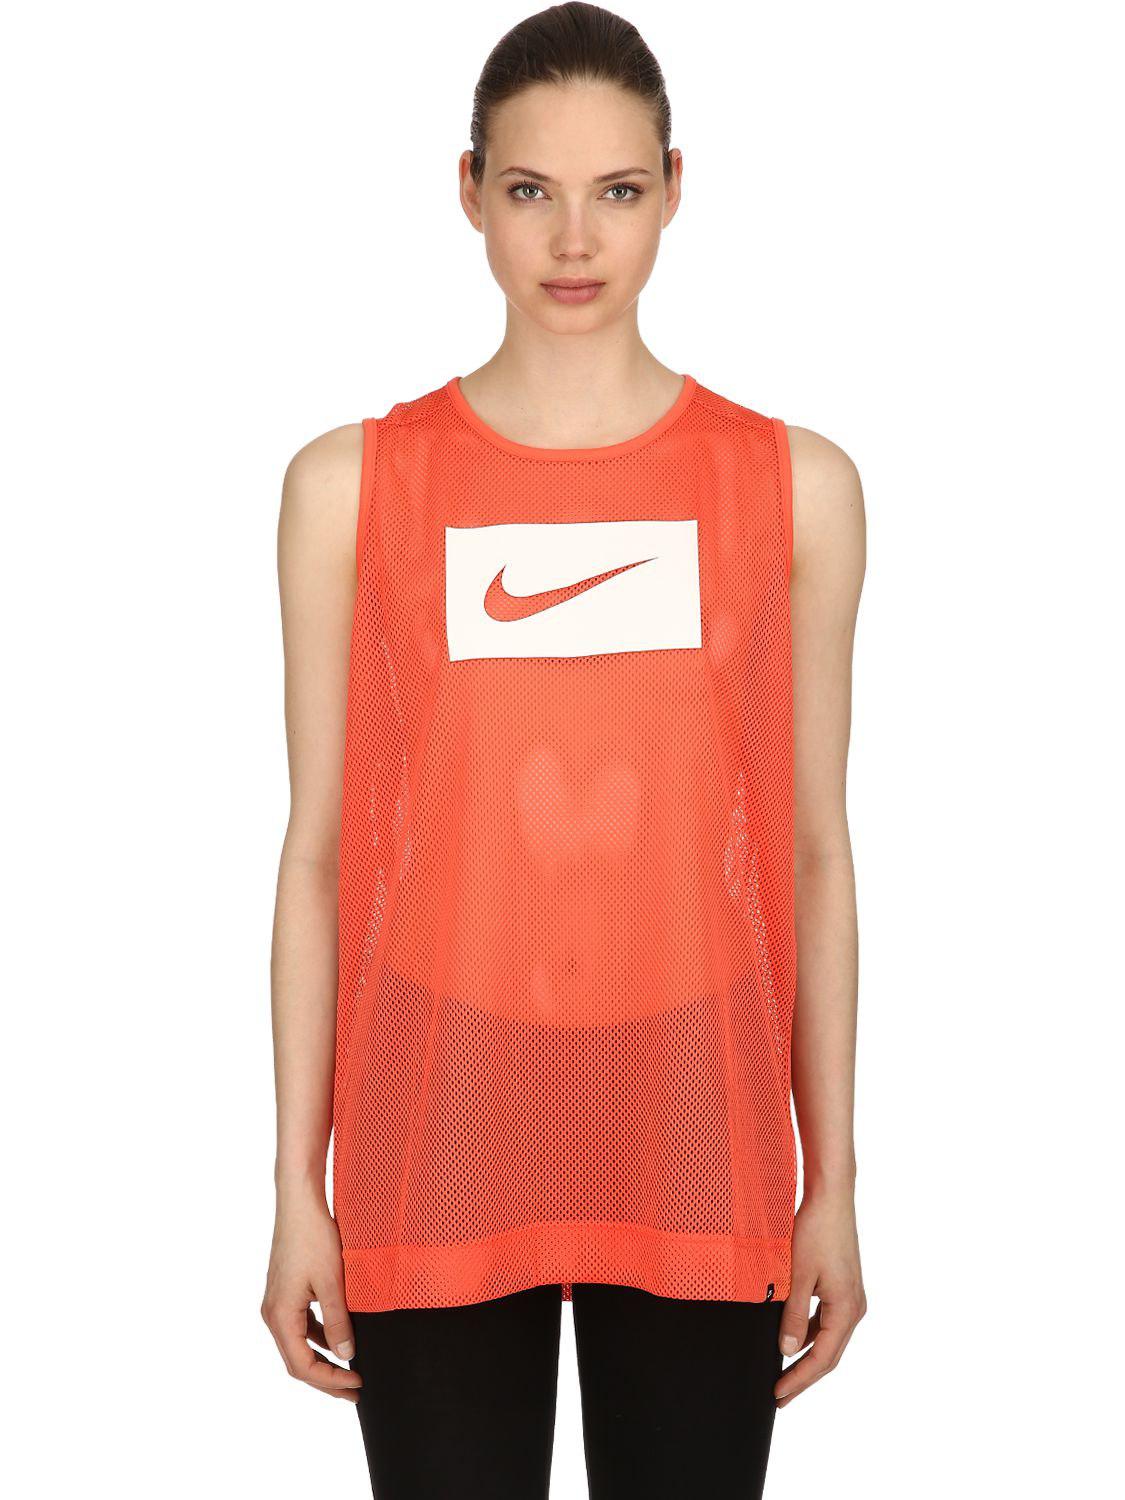 Nike Swoosh Print Mesh Tank Top in Orange - Lyst